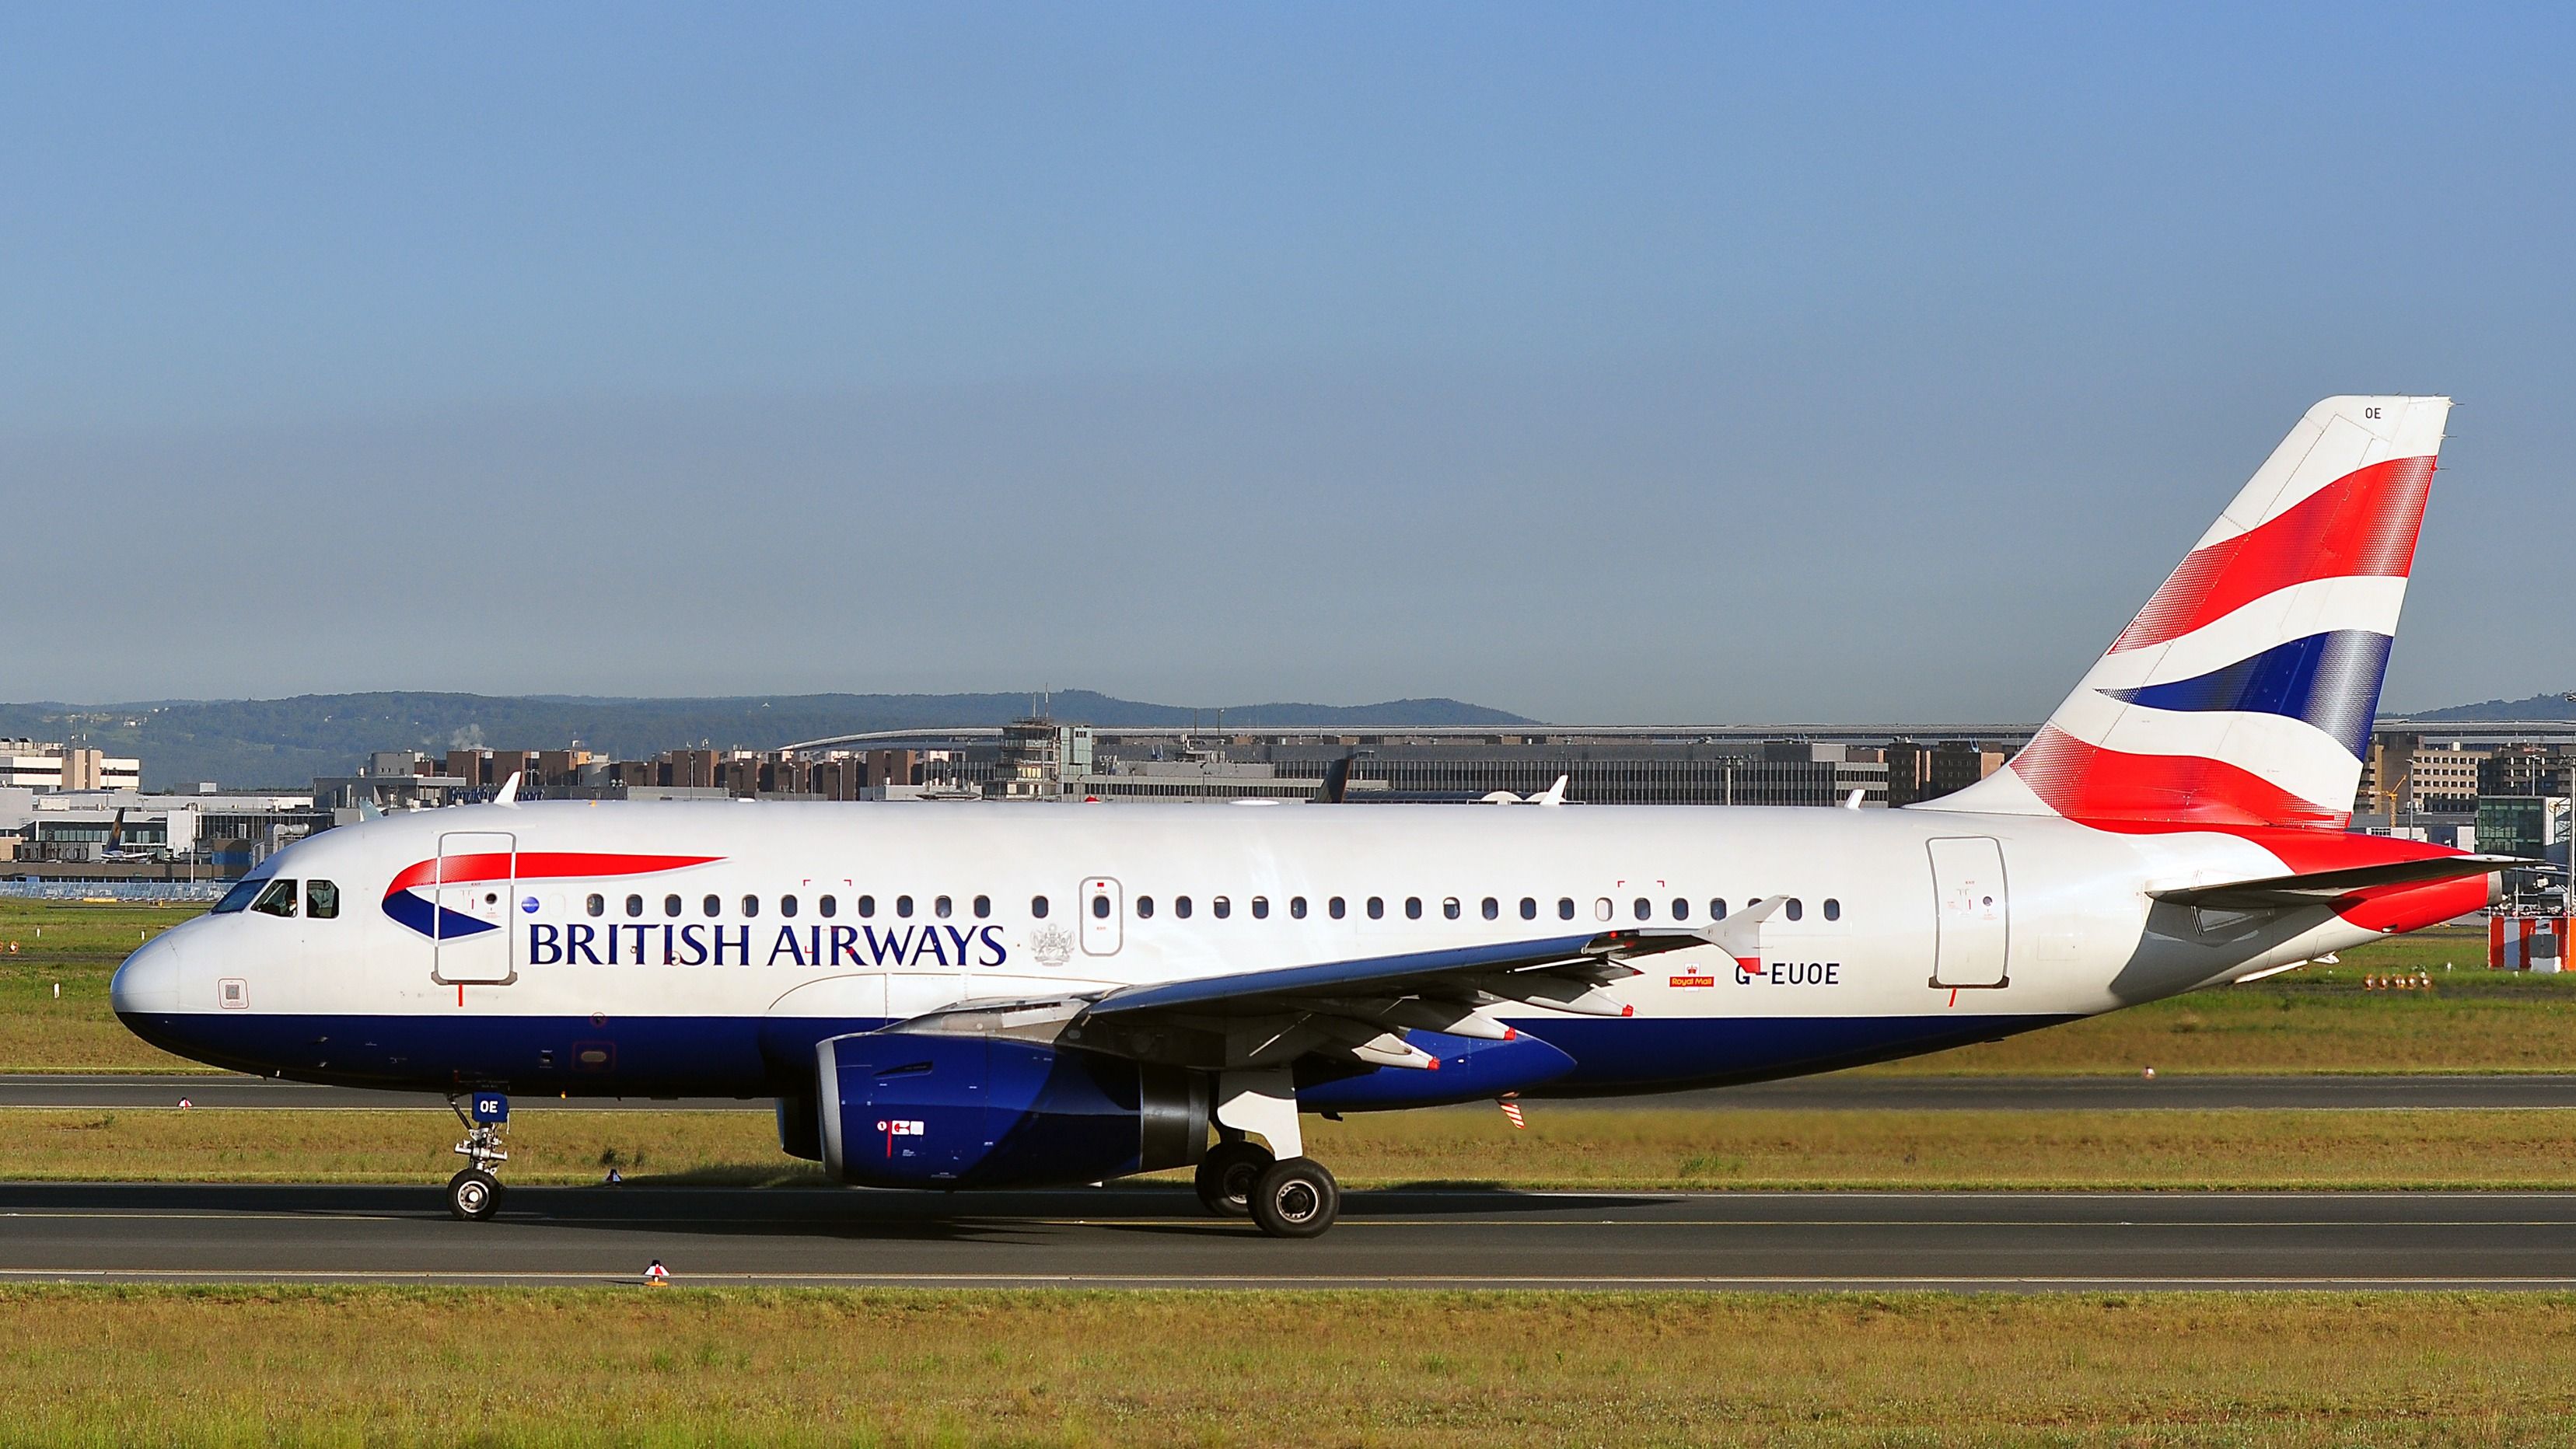 British Airways aircraft on the runway